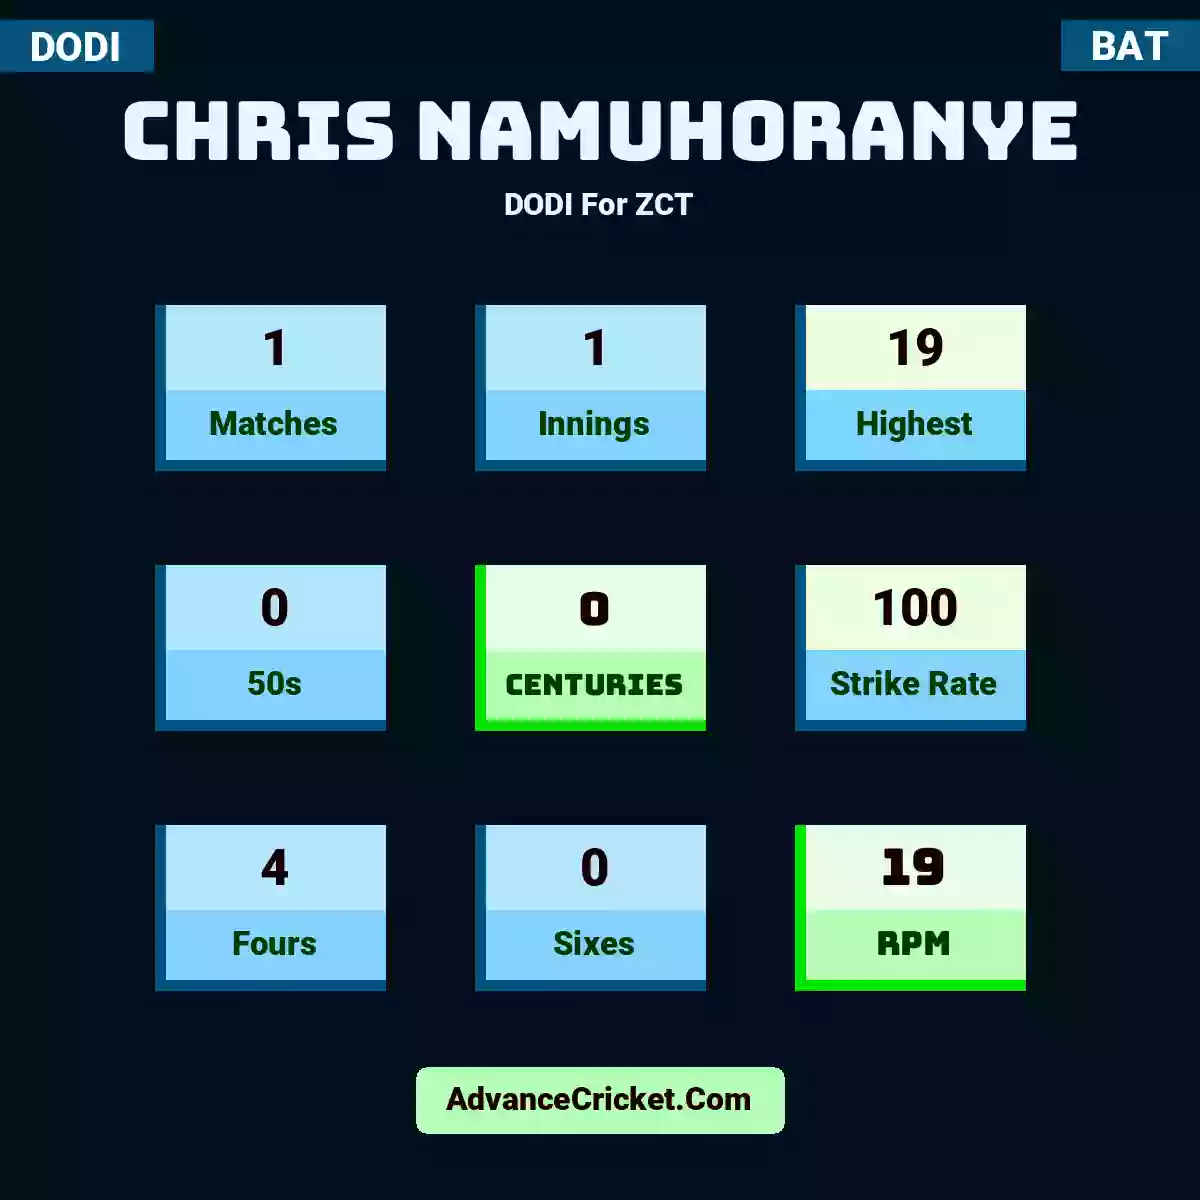 Chris Namuhoranye DODI  For ZCT, Chris Namuhoranye played 1 matches, scored 19 runs as highest, 0 half-centuries, and 0 centuries, with a strike rate of 100. C.Namuhoranye hit 4 fours and 0 sixes, with an RPM of 19.